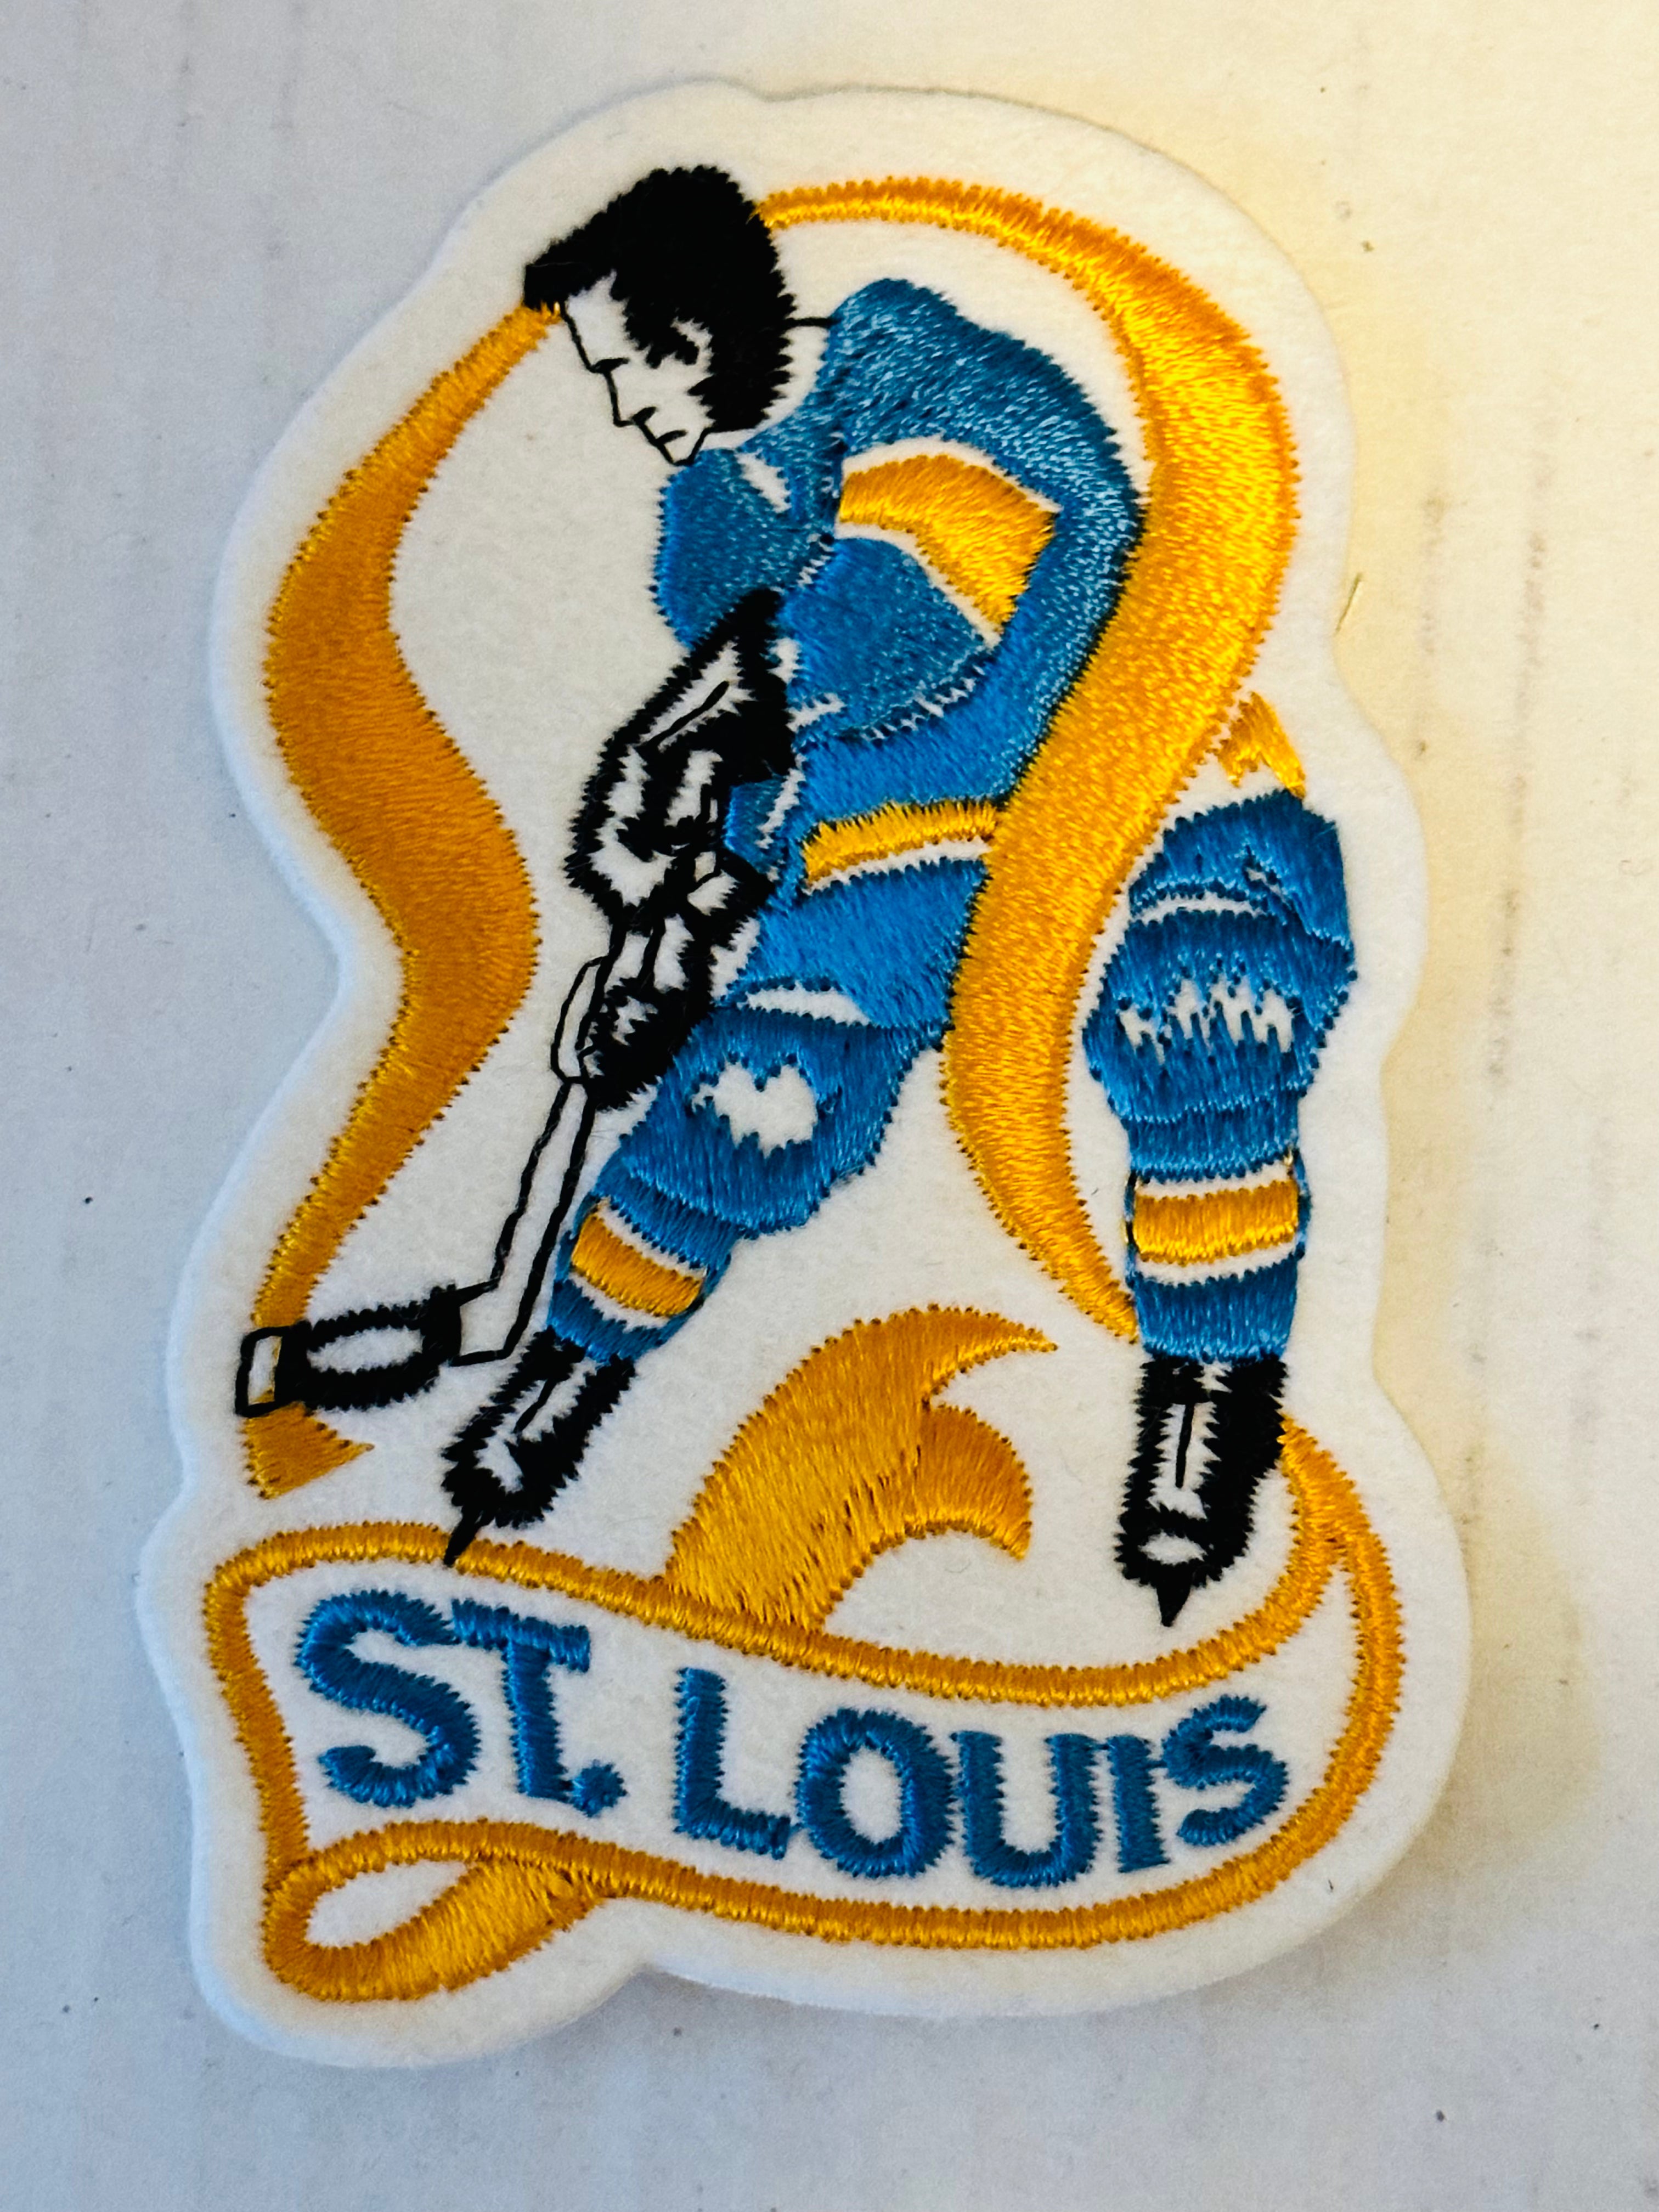 St.Louis Blues vintage hockey patch 1980s